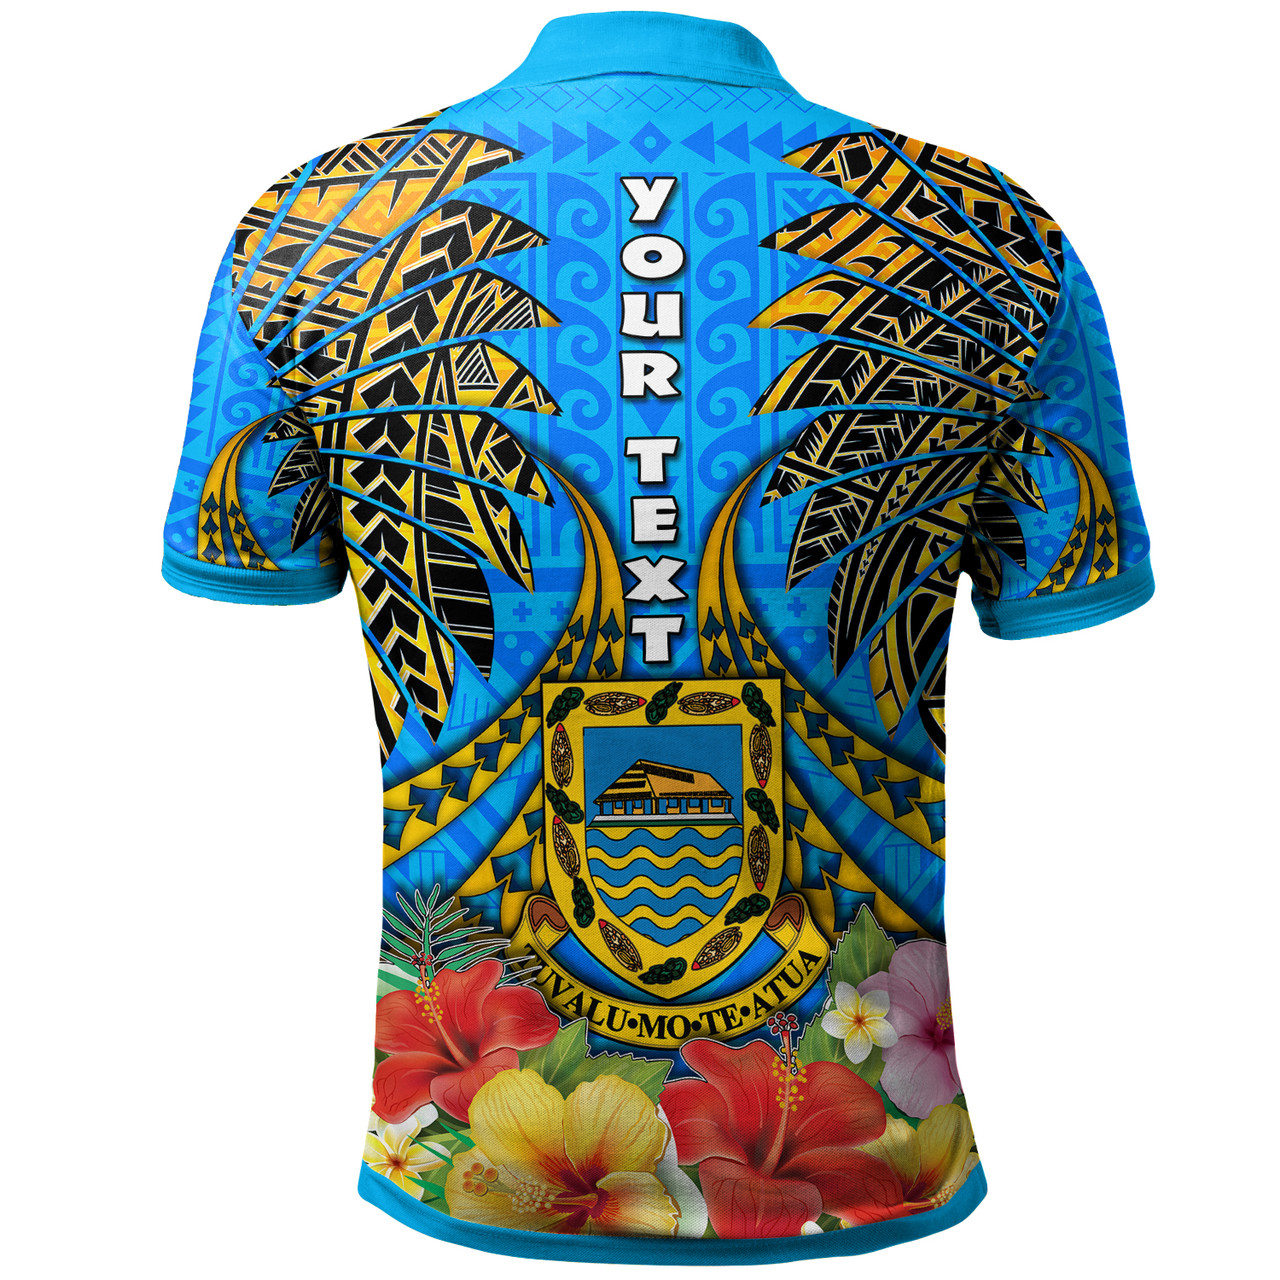 Tuvalu Polynesian Polo Shirt - Custom Tuvalu Independence Day with Polynesian Hibiscus Polo Shirt